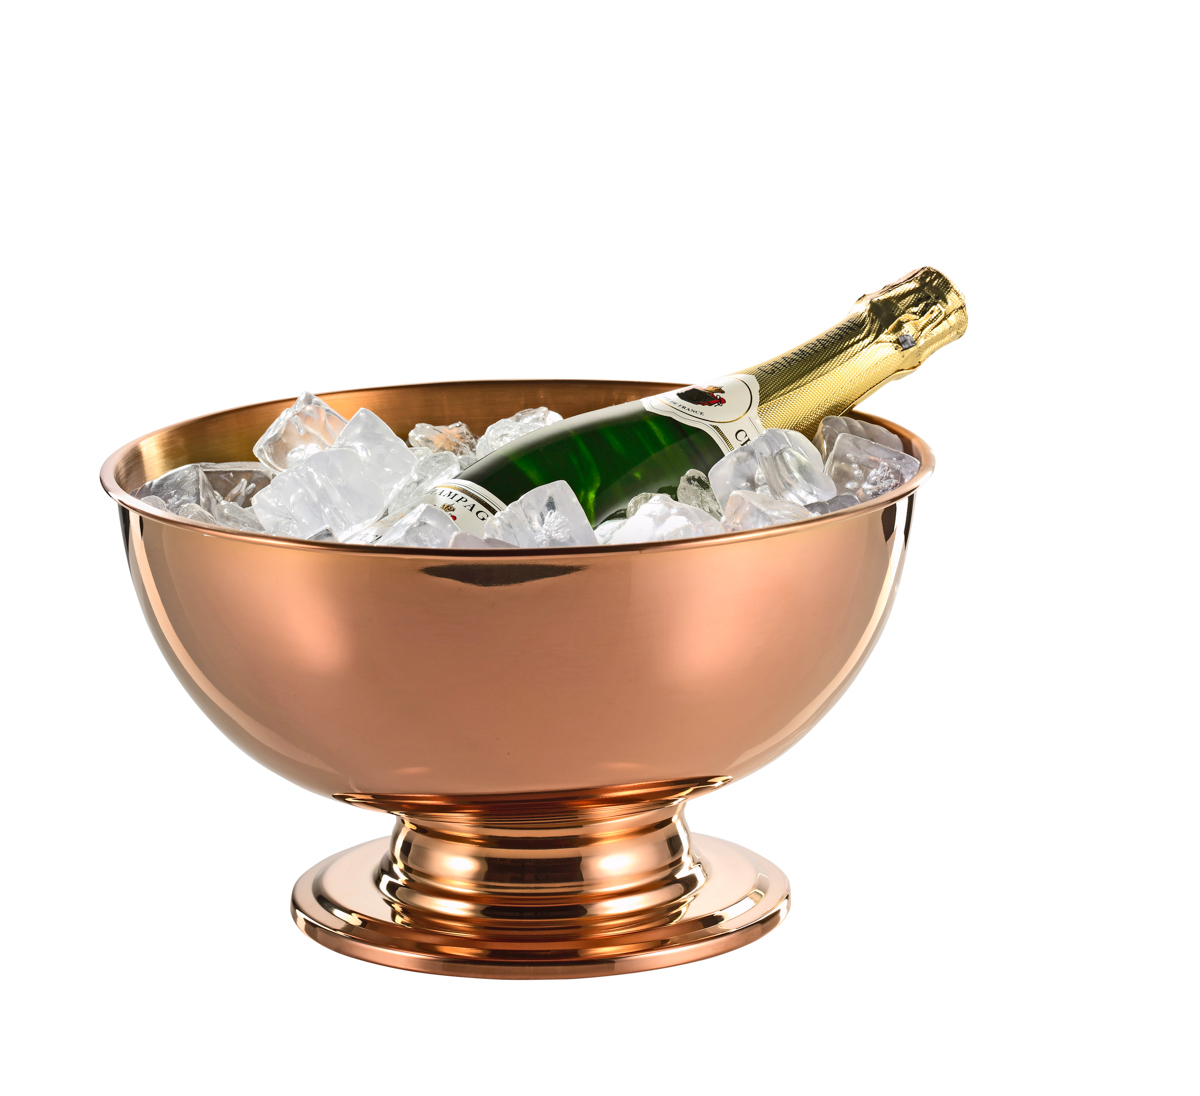 Champagner-Kühler PORTLAND, Edelstahl, 5 ltr., mit kupferfarbener PVD-Beschichtung